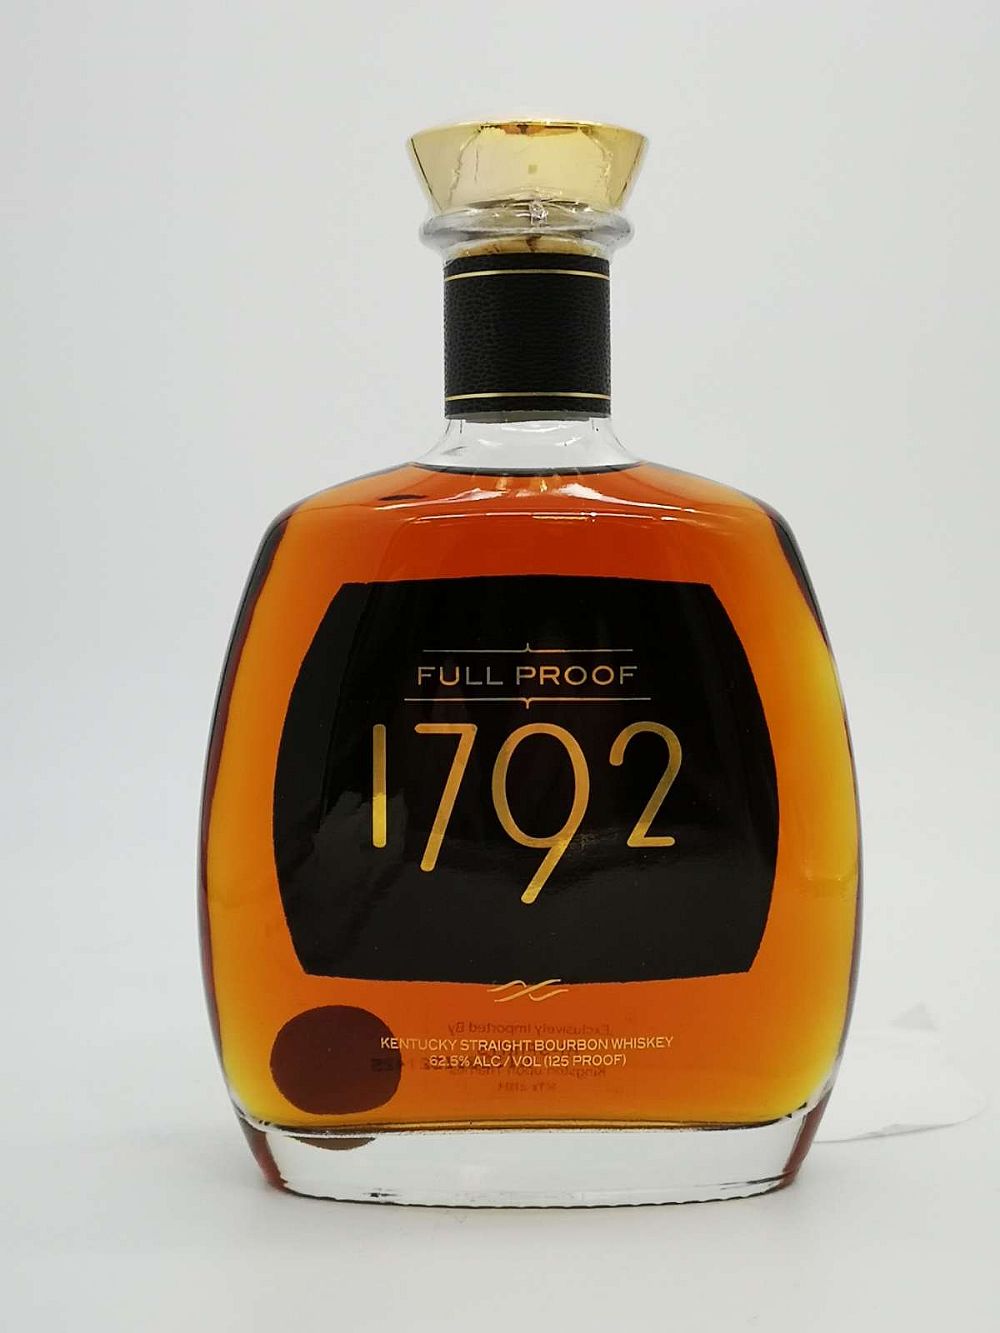 Blanton's 1792 Full Proof Kentucky Straight Bourbon Whiskey